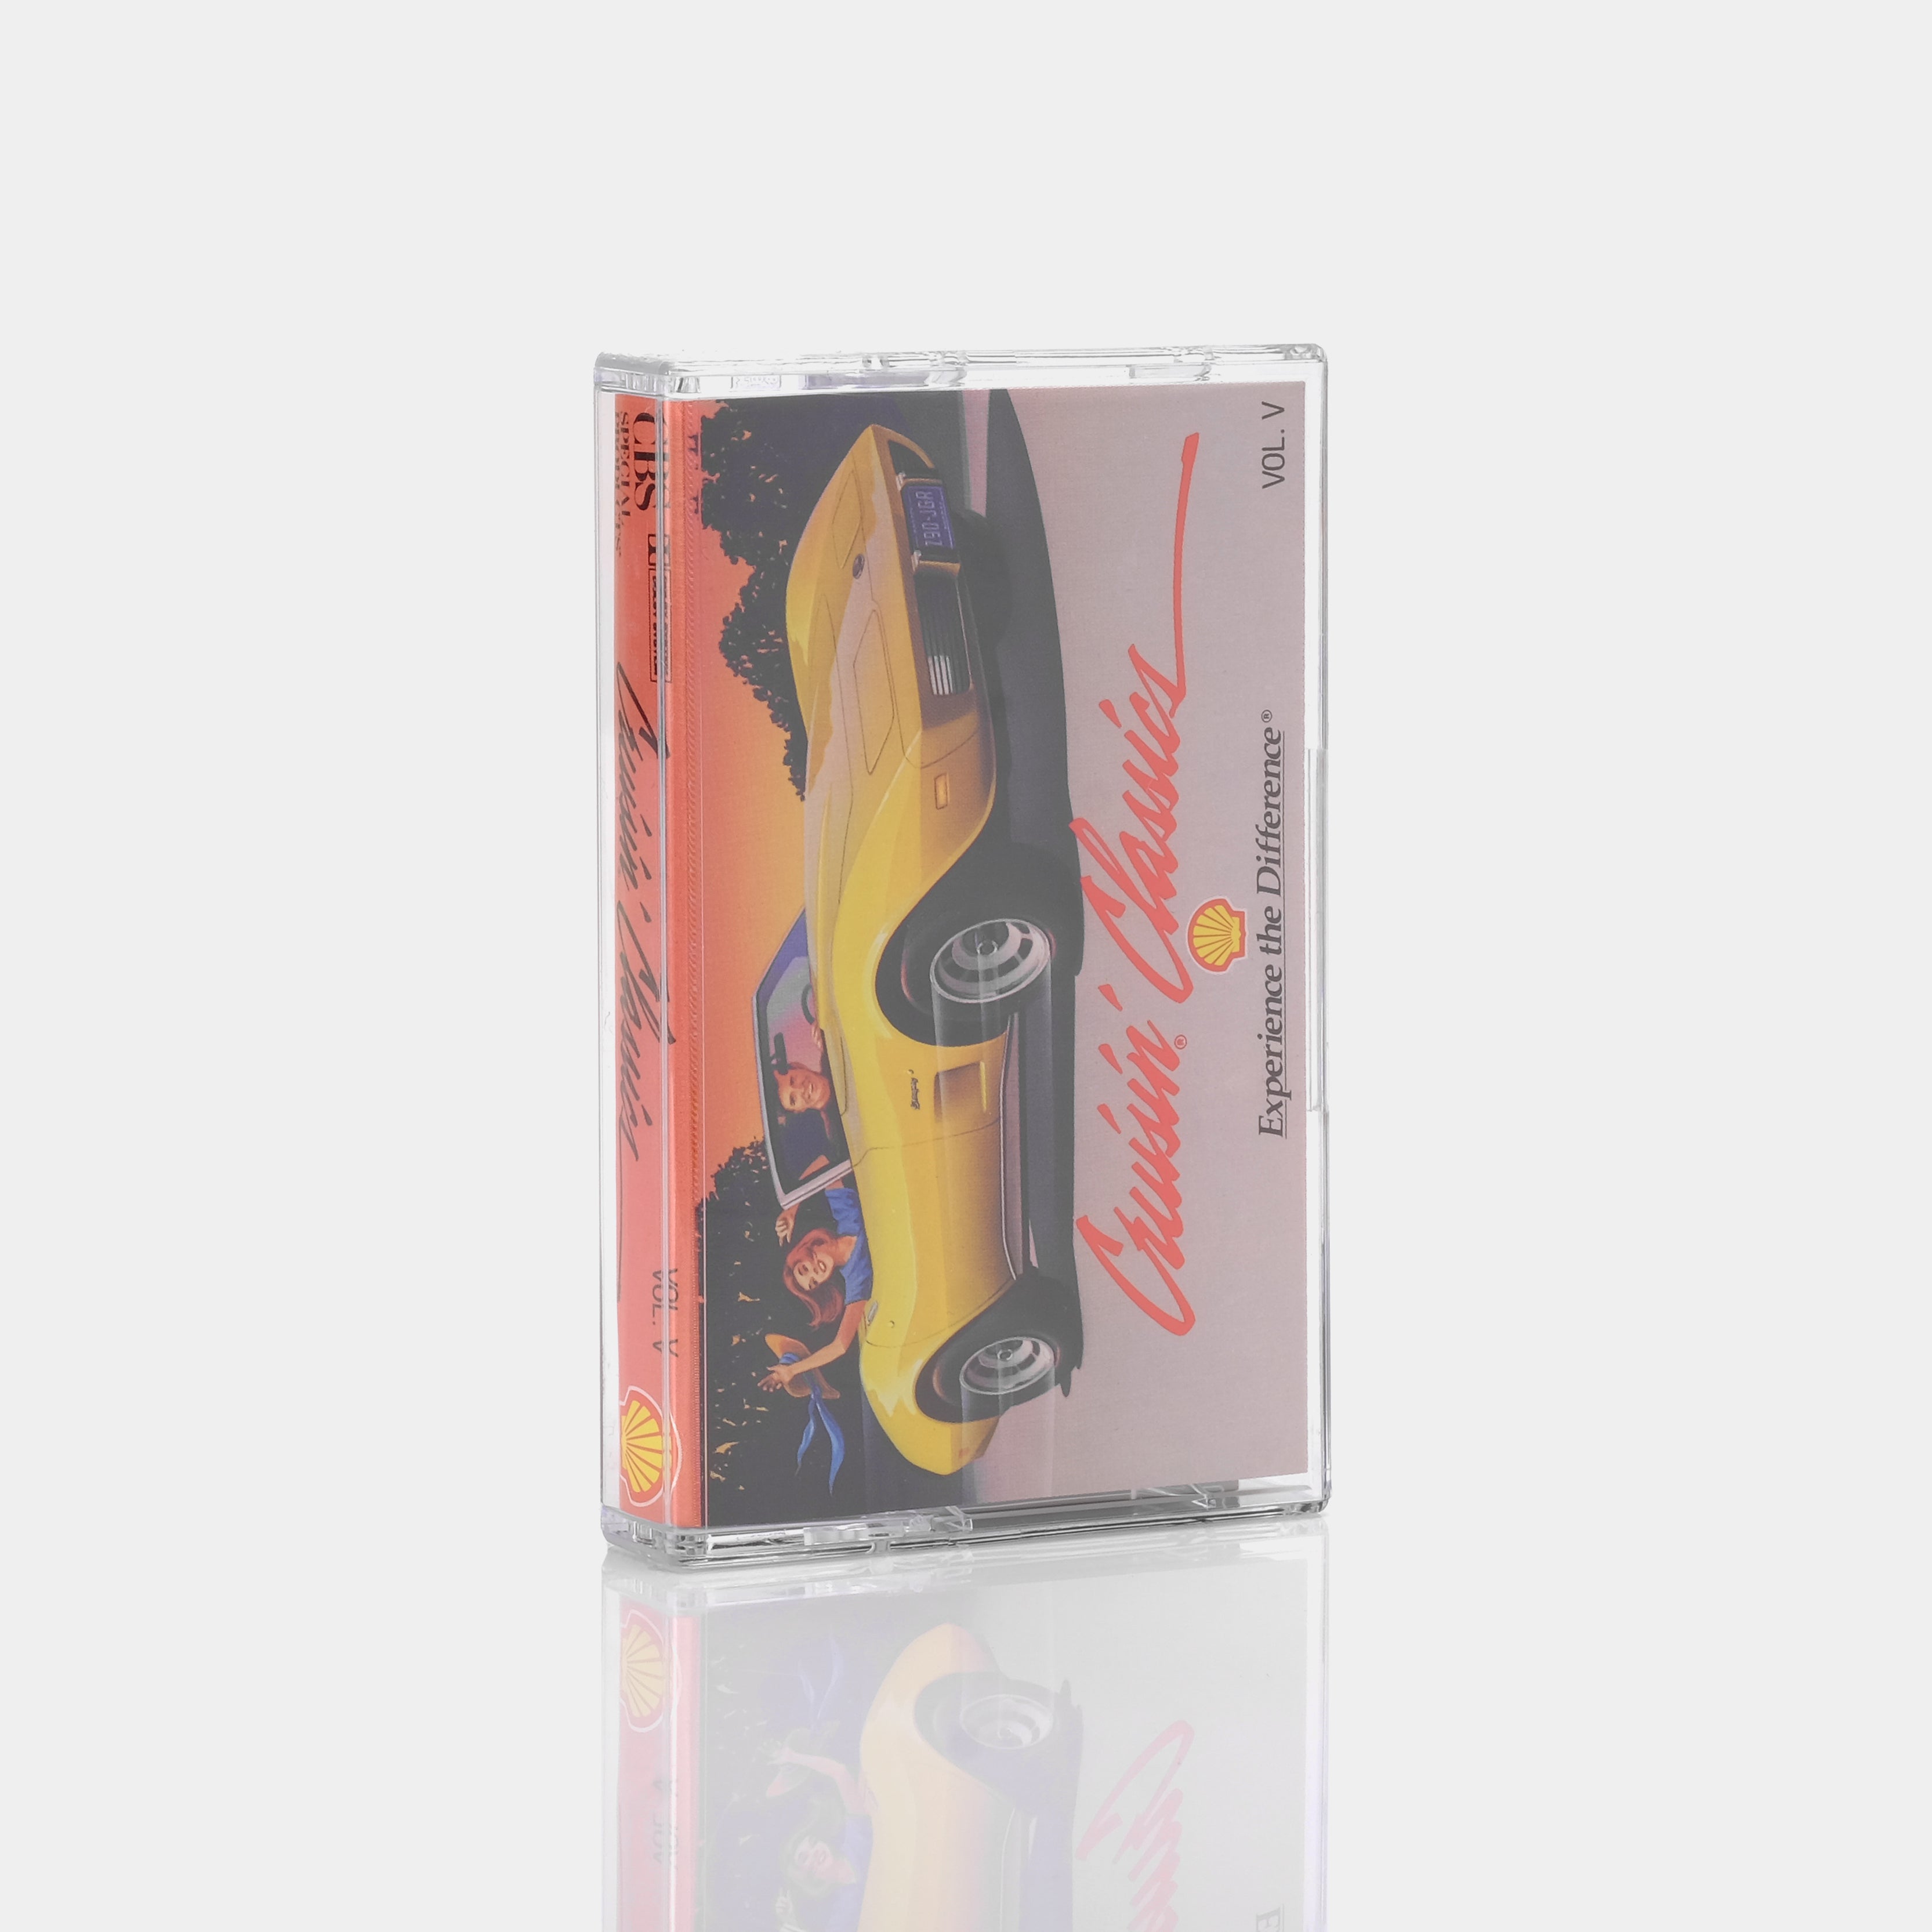 Cruisin' Classics Vol. V Cassette Tape